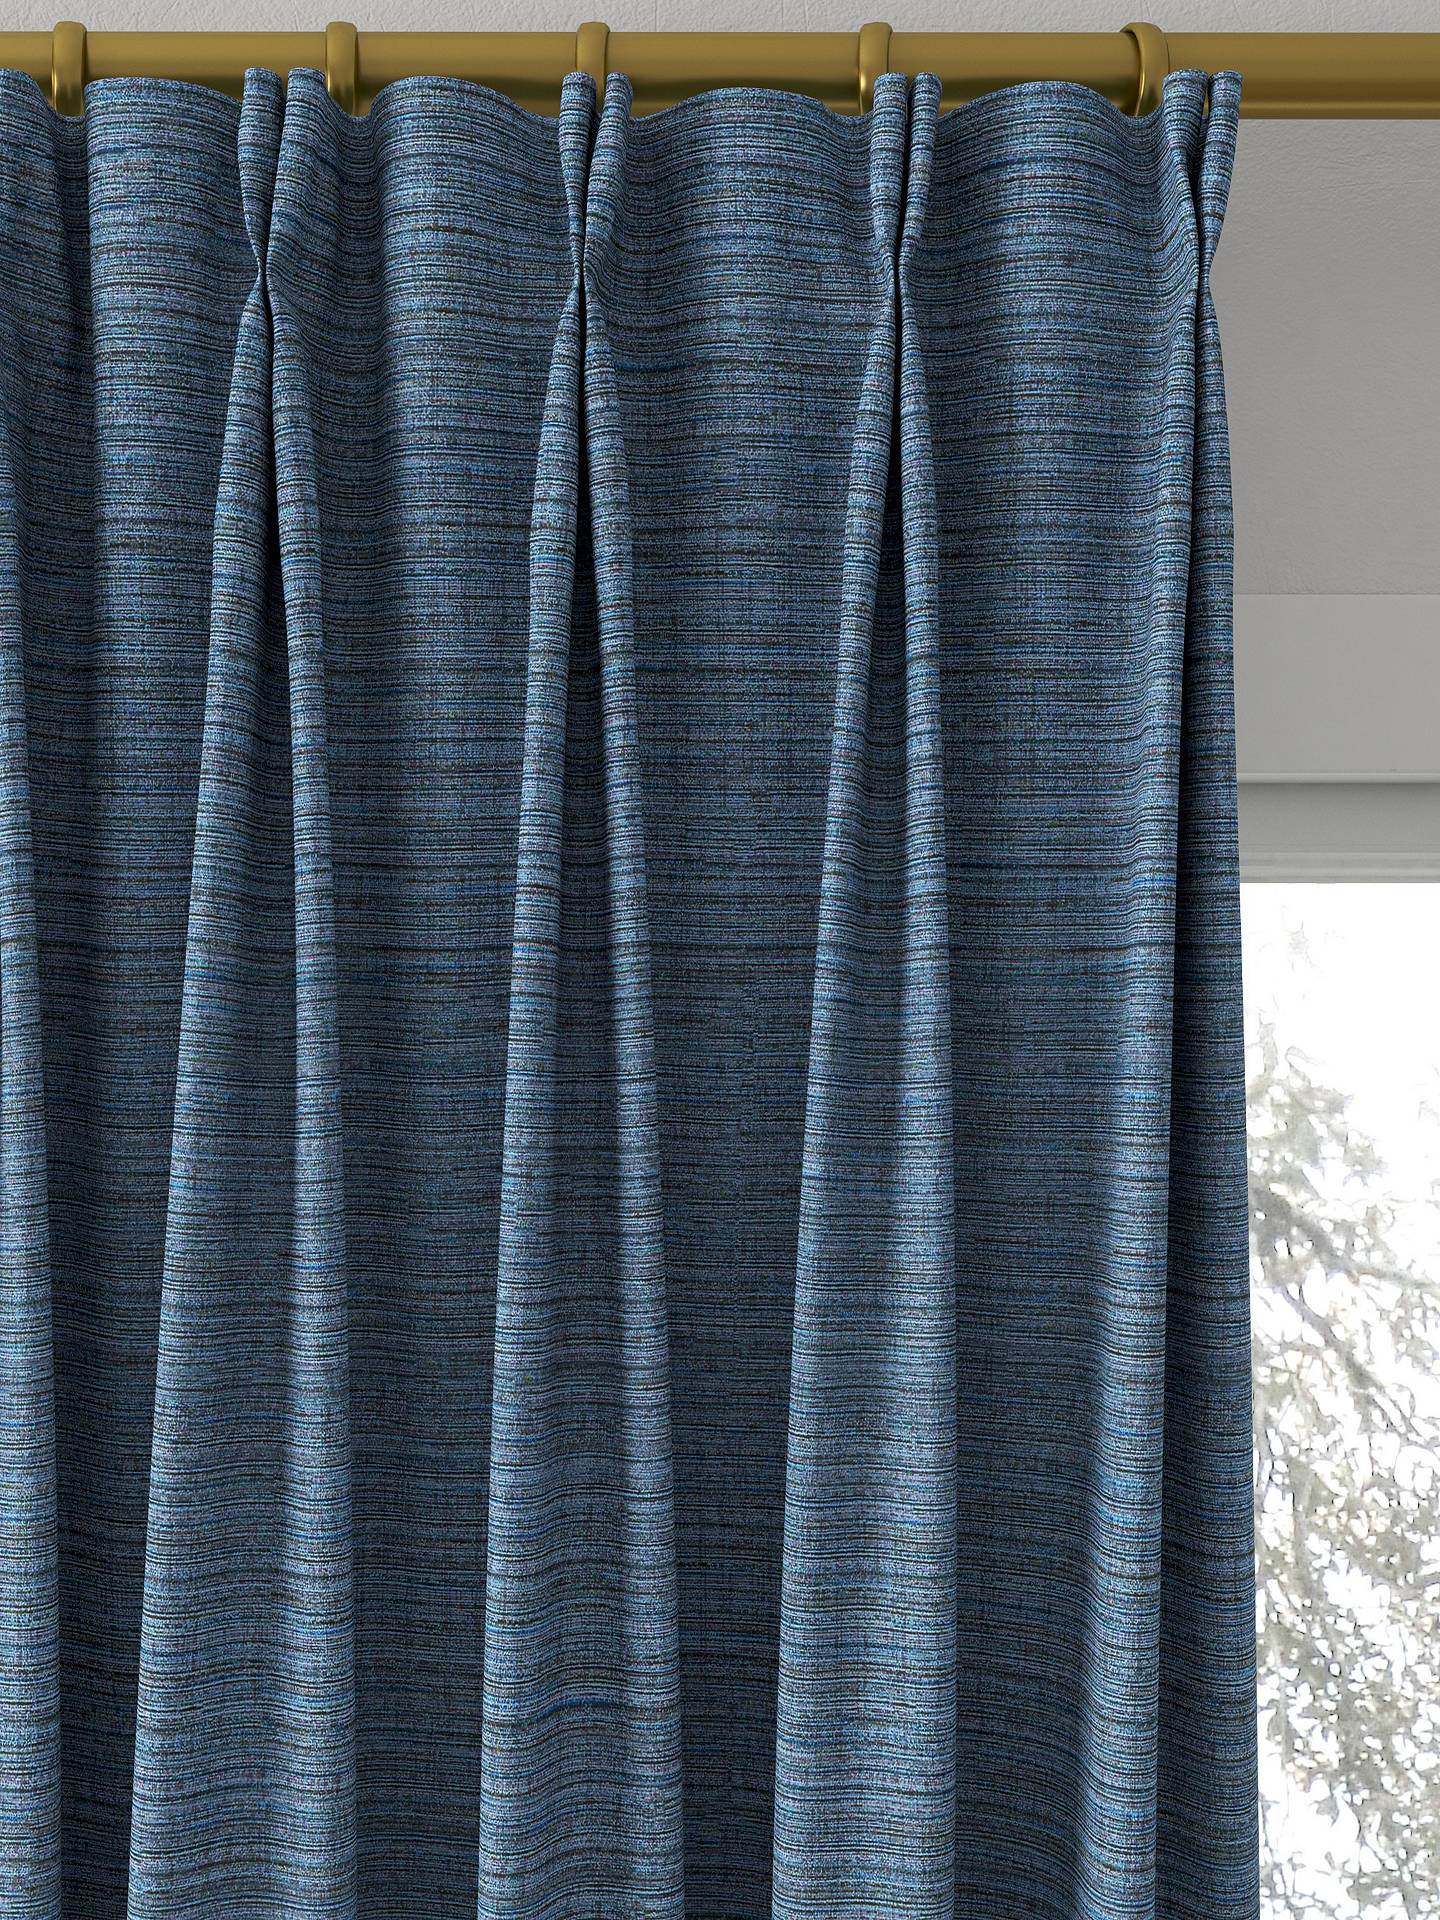 Designers Guild Kumana Made to Measure Curtains, Cobalt